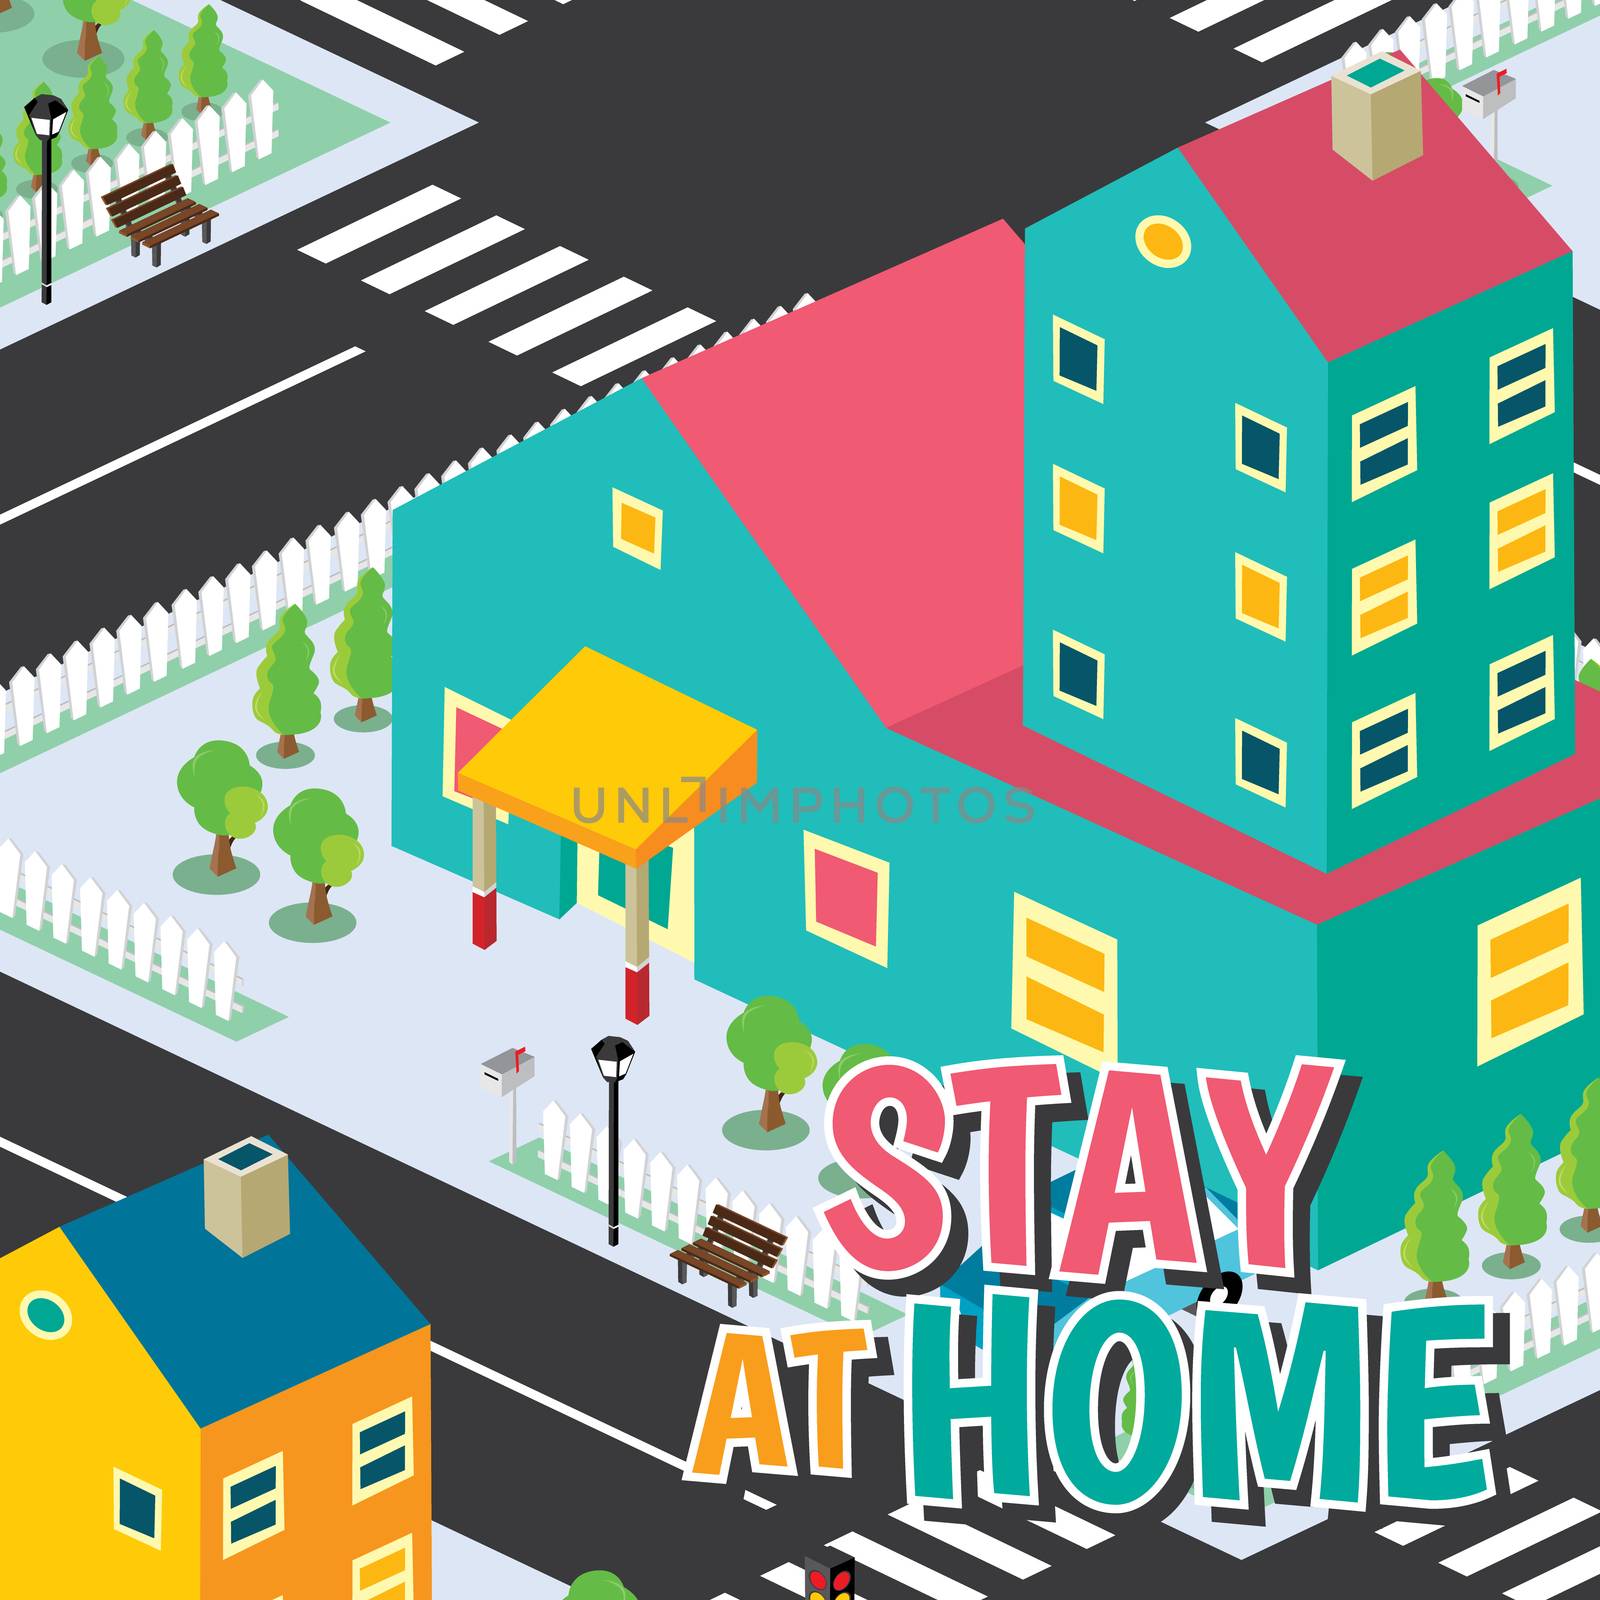 stay at home concept coronavirus quarantine illustration by vector1st